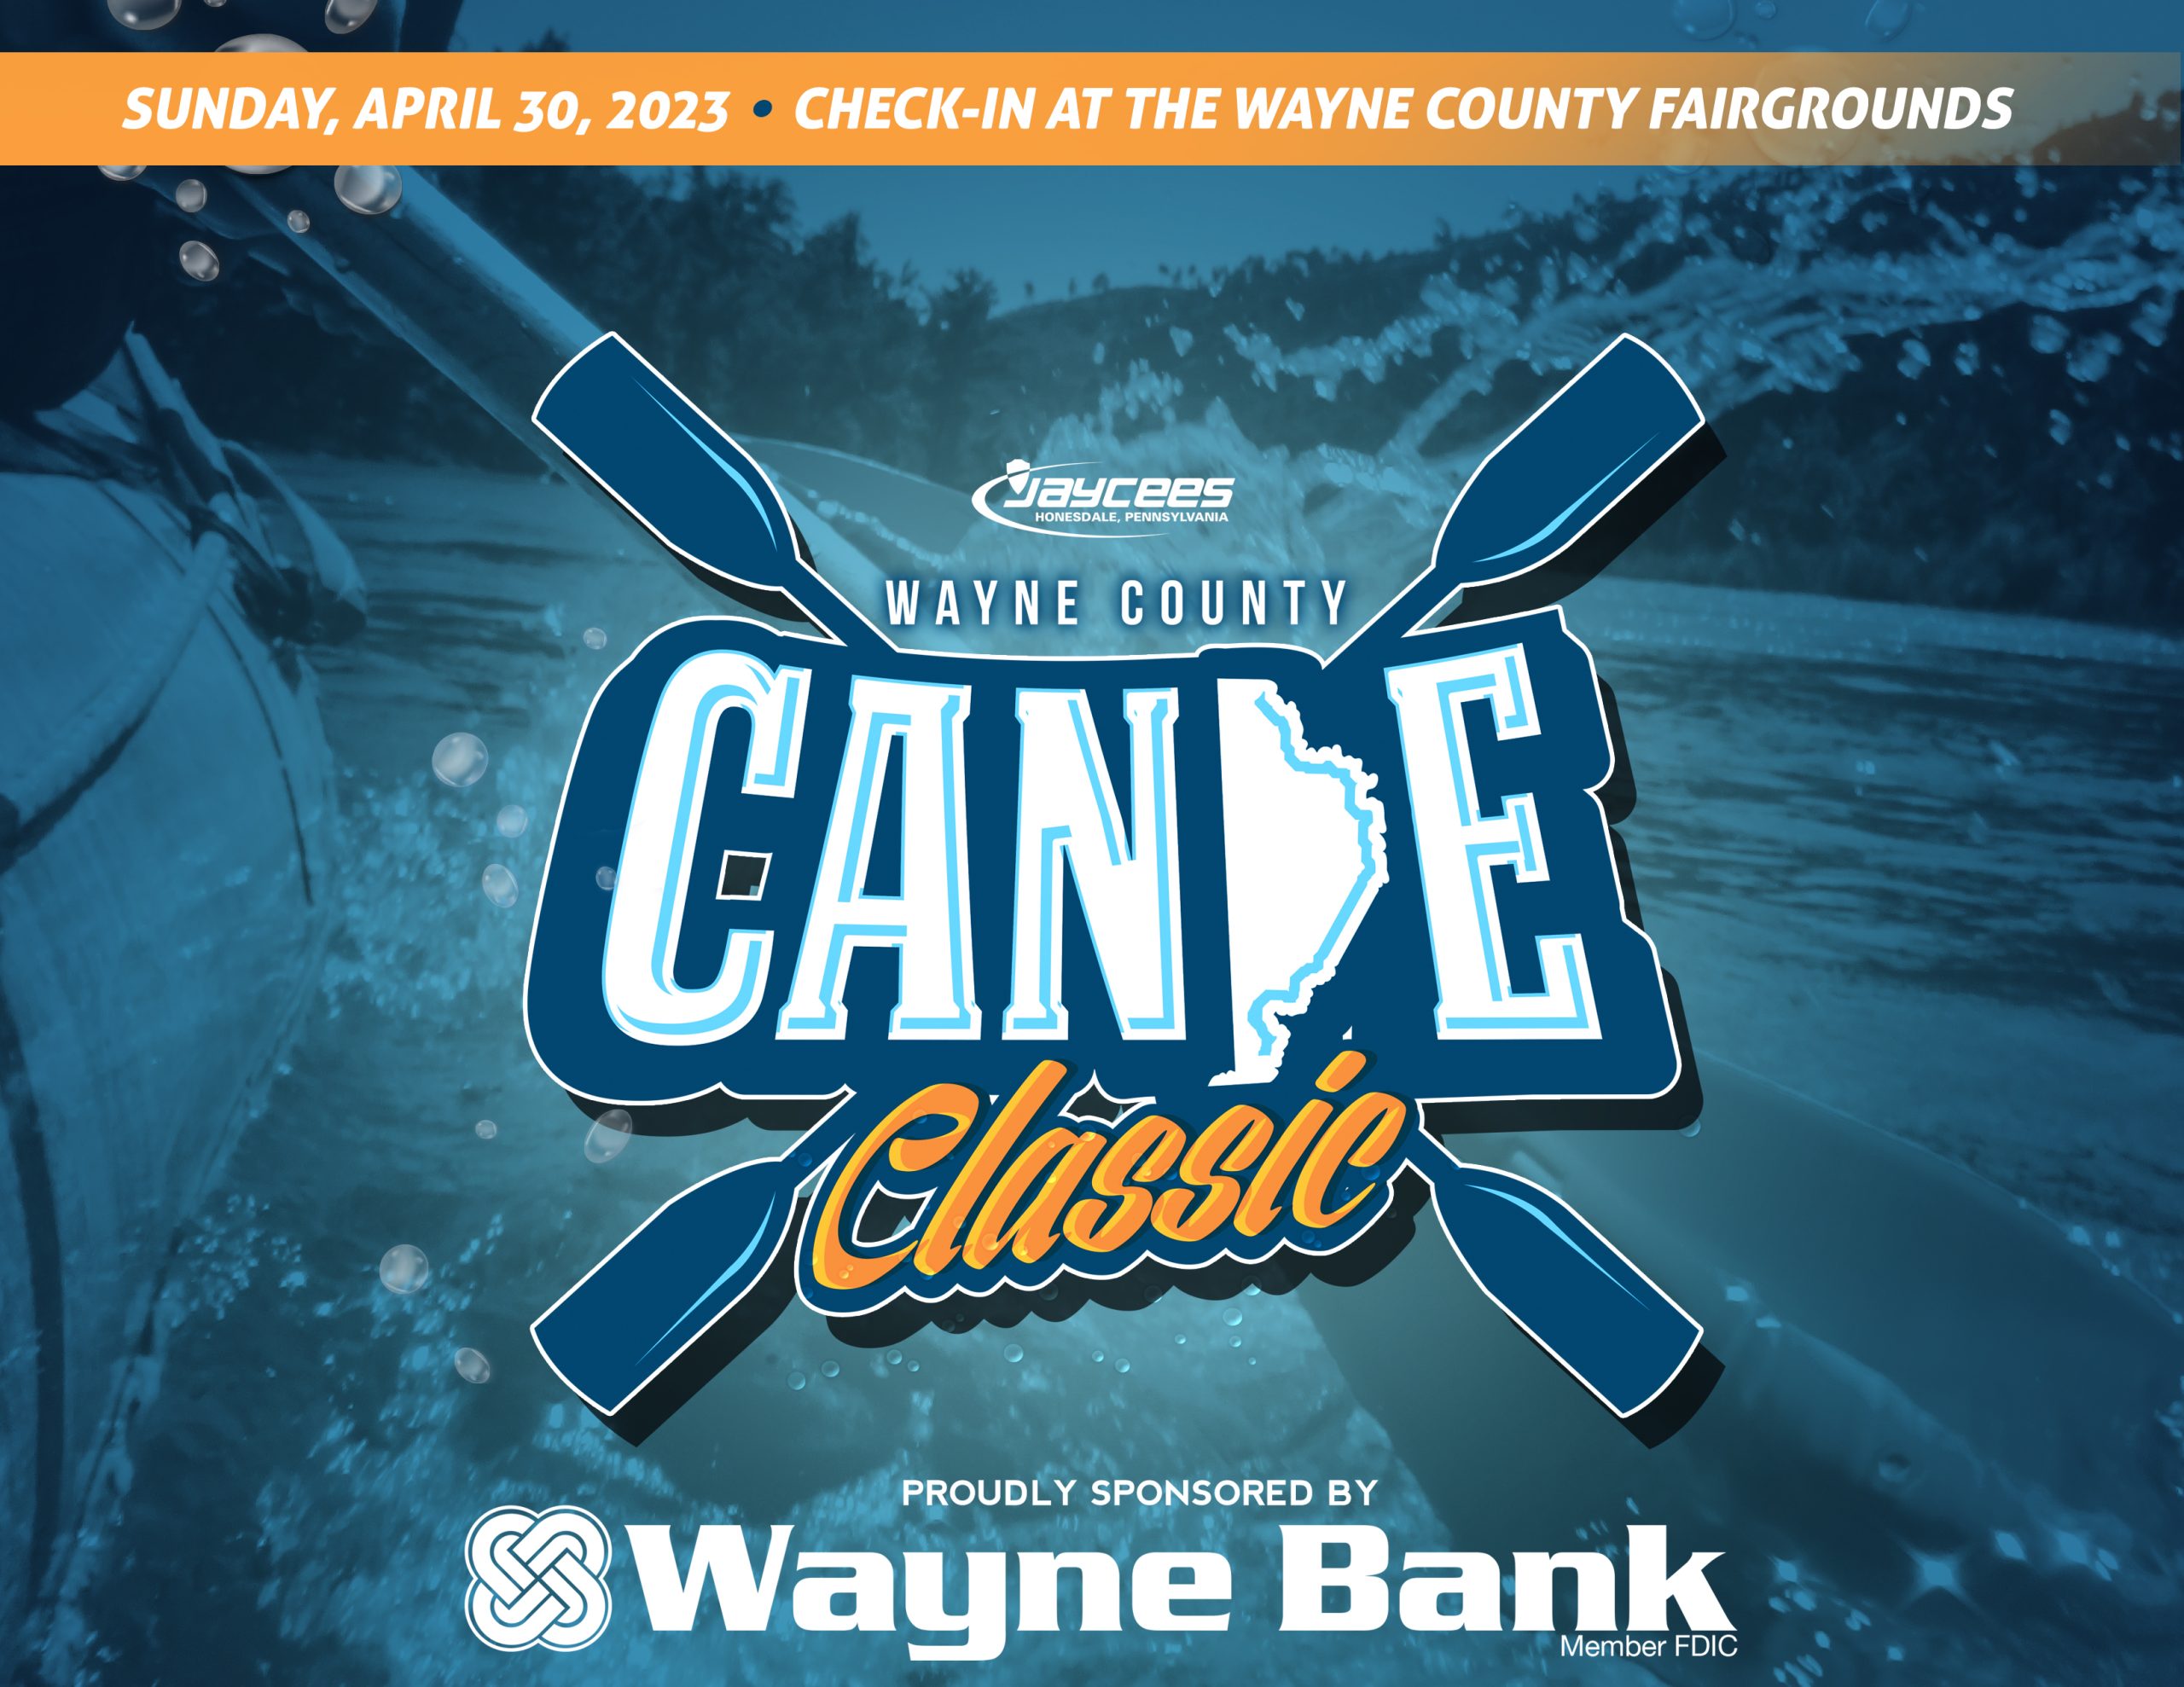 2023 Jaycees Wayne County Canoe Classic